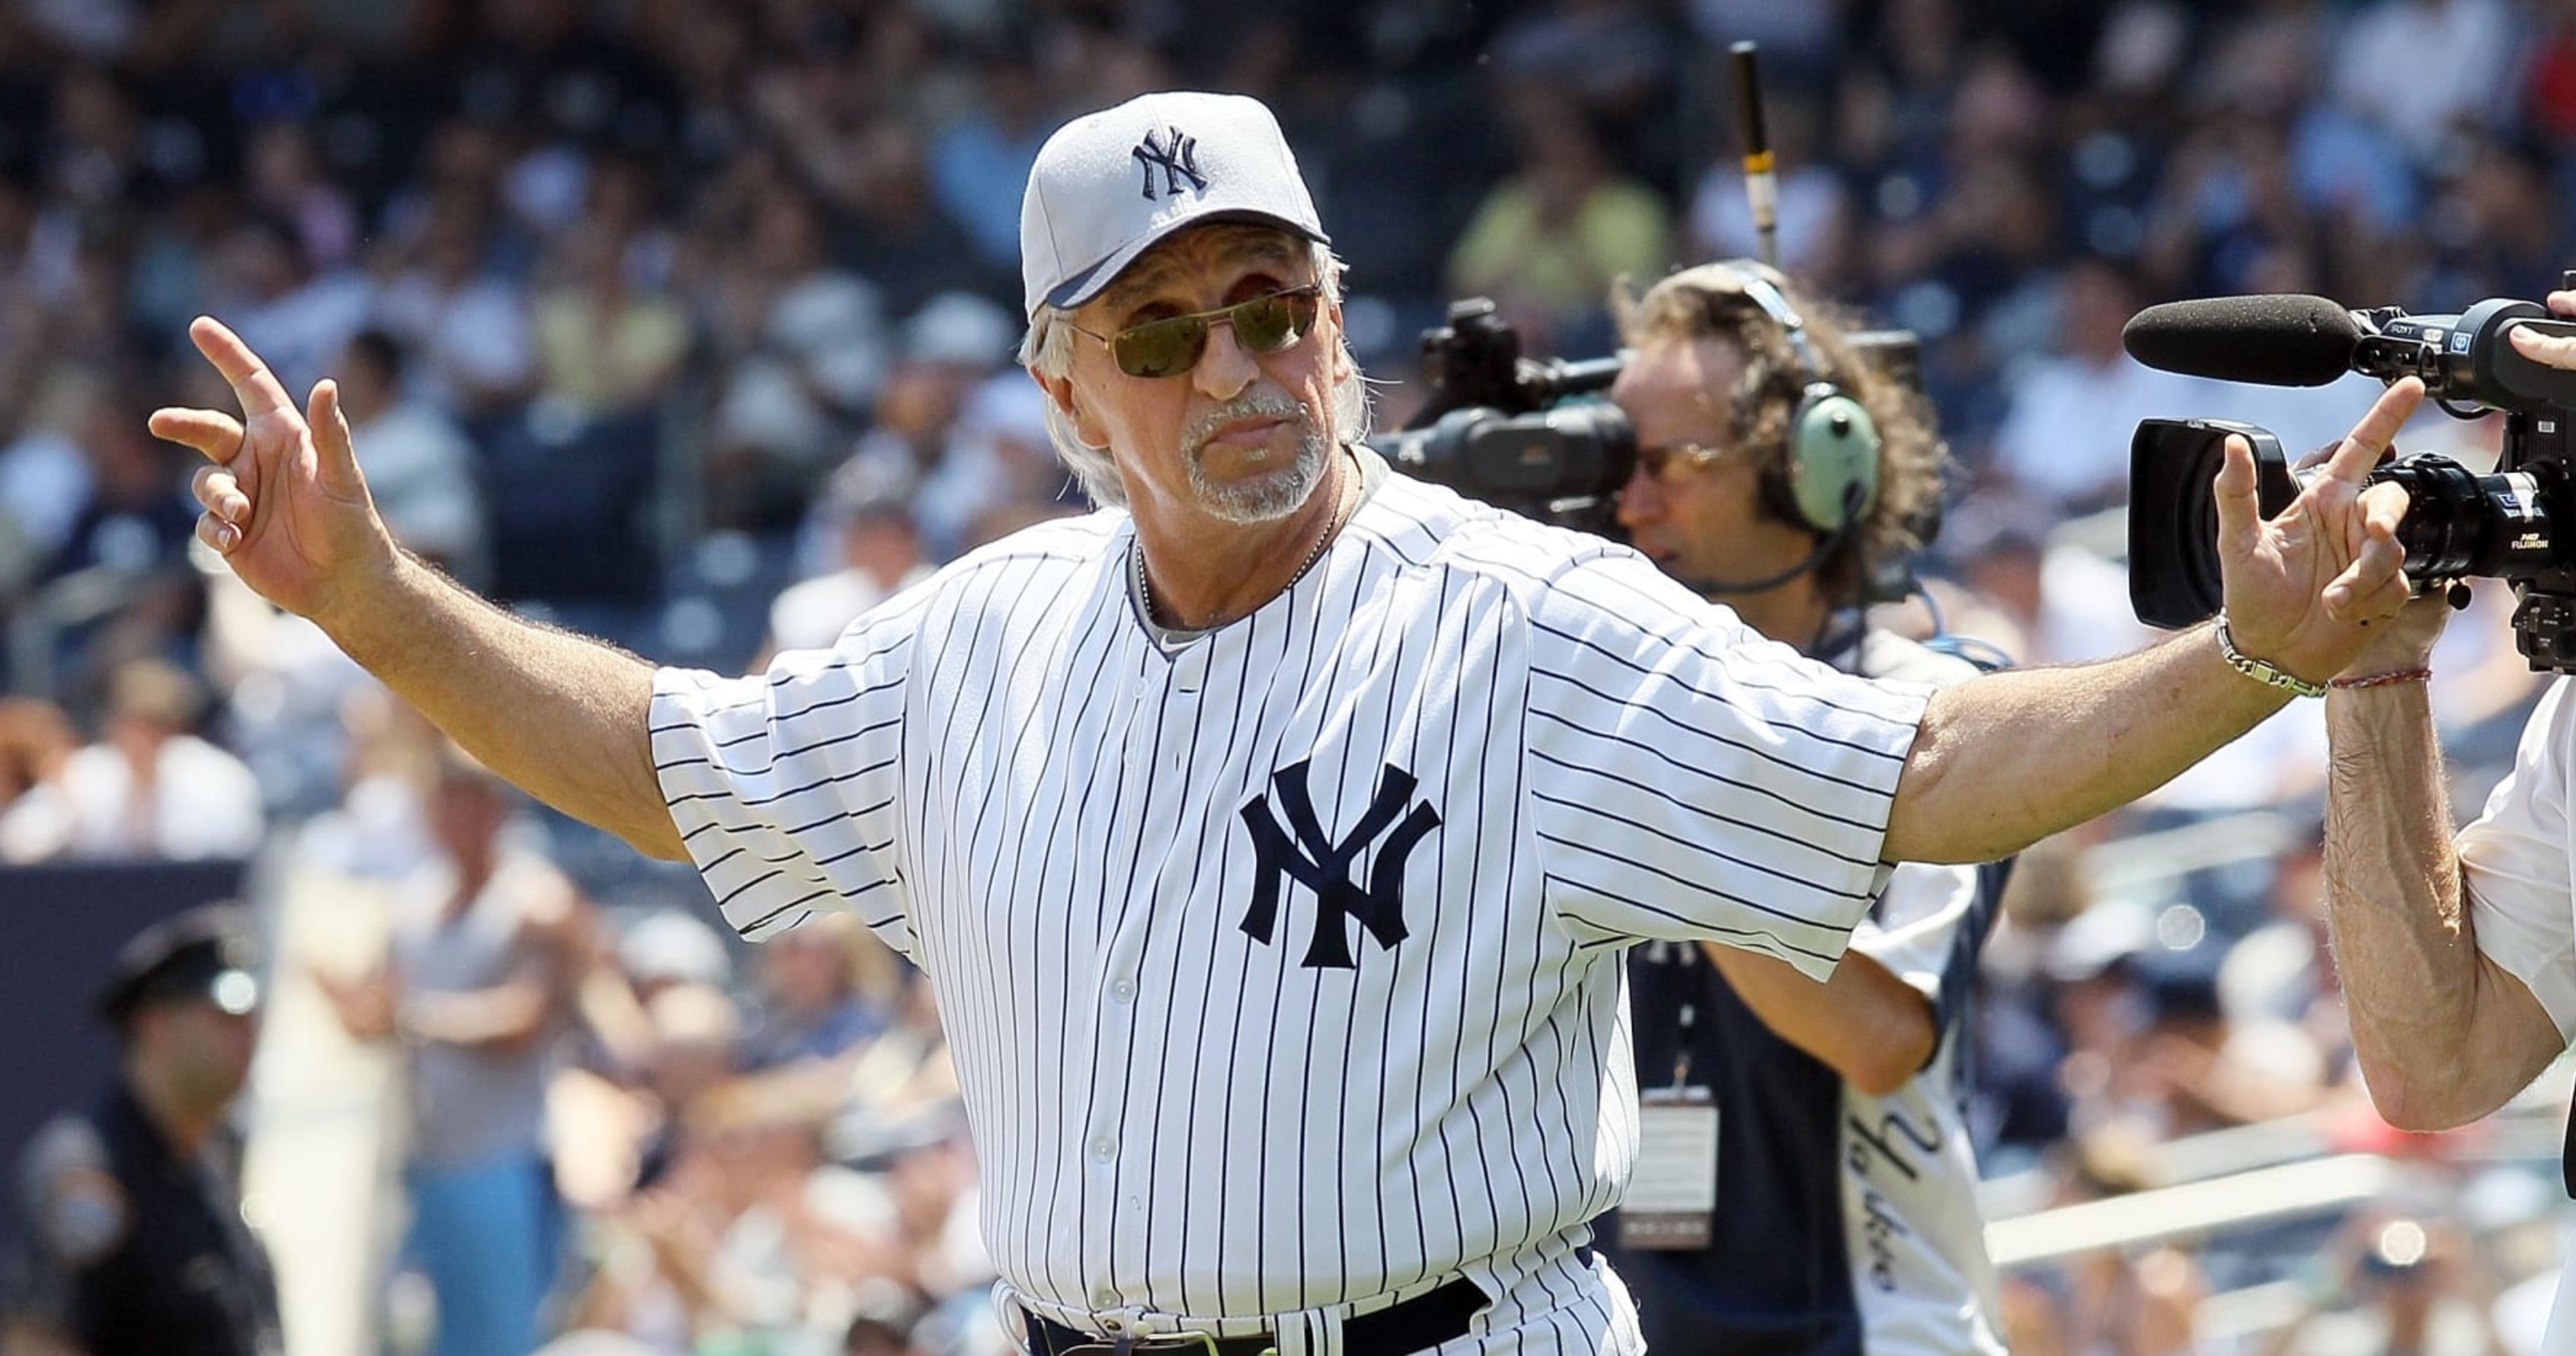 Joe Pepitone, popular New York Yankees player and three-time All